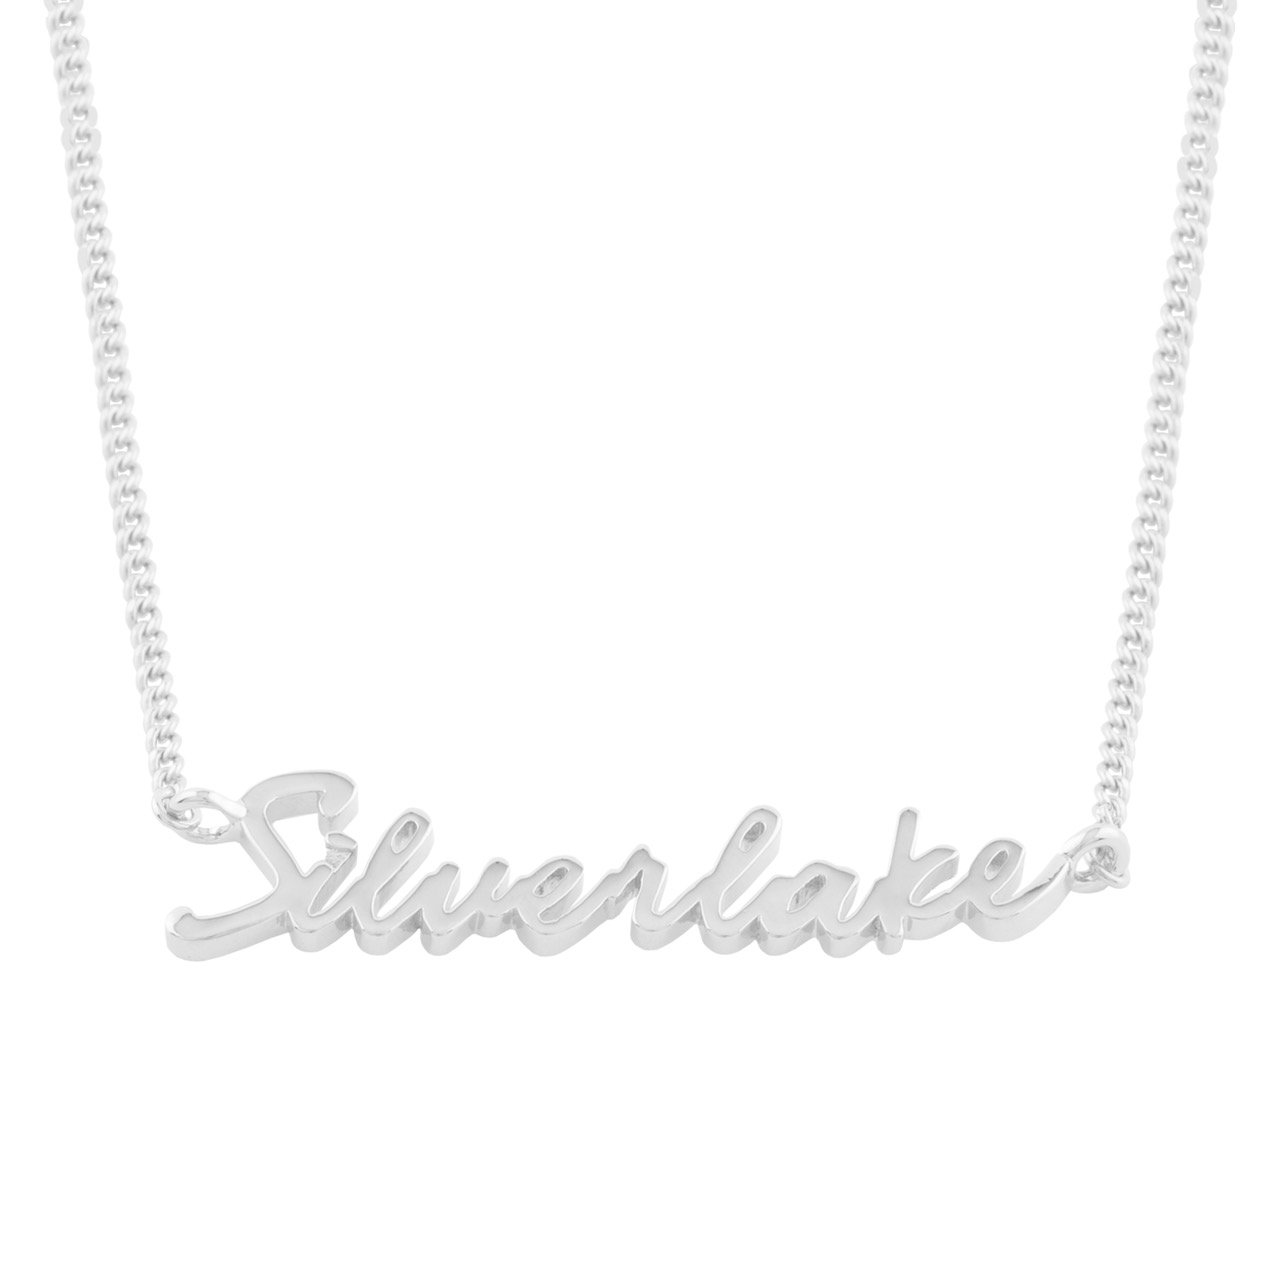 Silverlake Signature Bracelet - Capsul